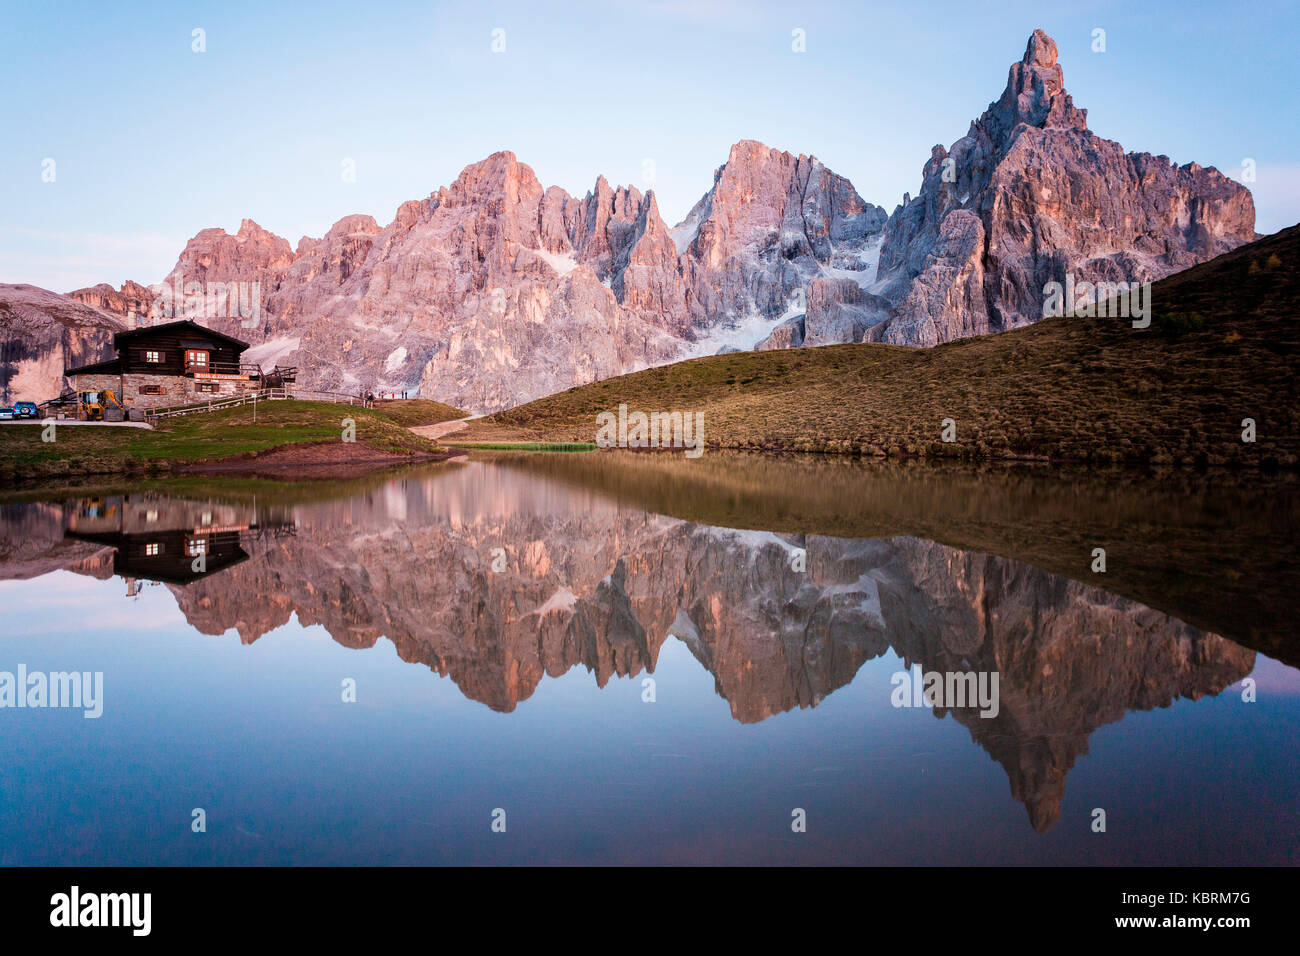 Dolomites Alps, Pale di San Martino reflecting on water, Baita Segantini, Trentino Alto Adige, Italy Stock Photo